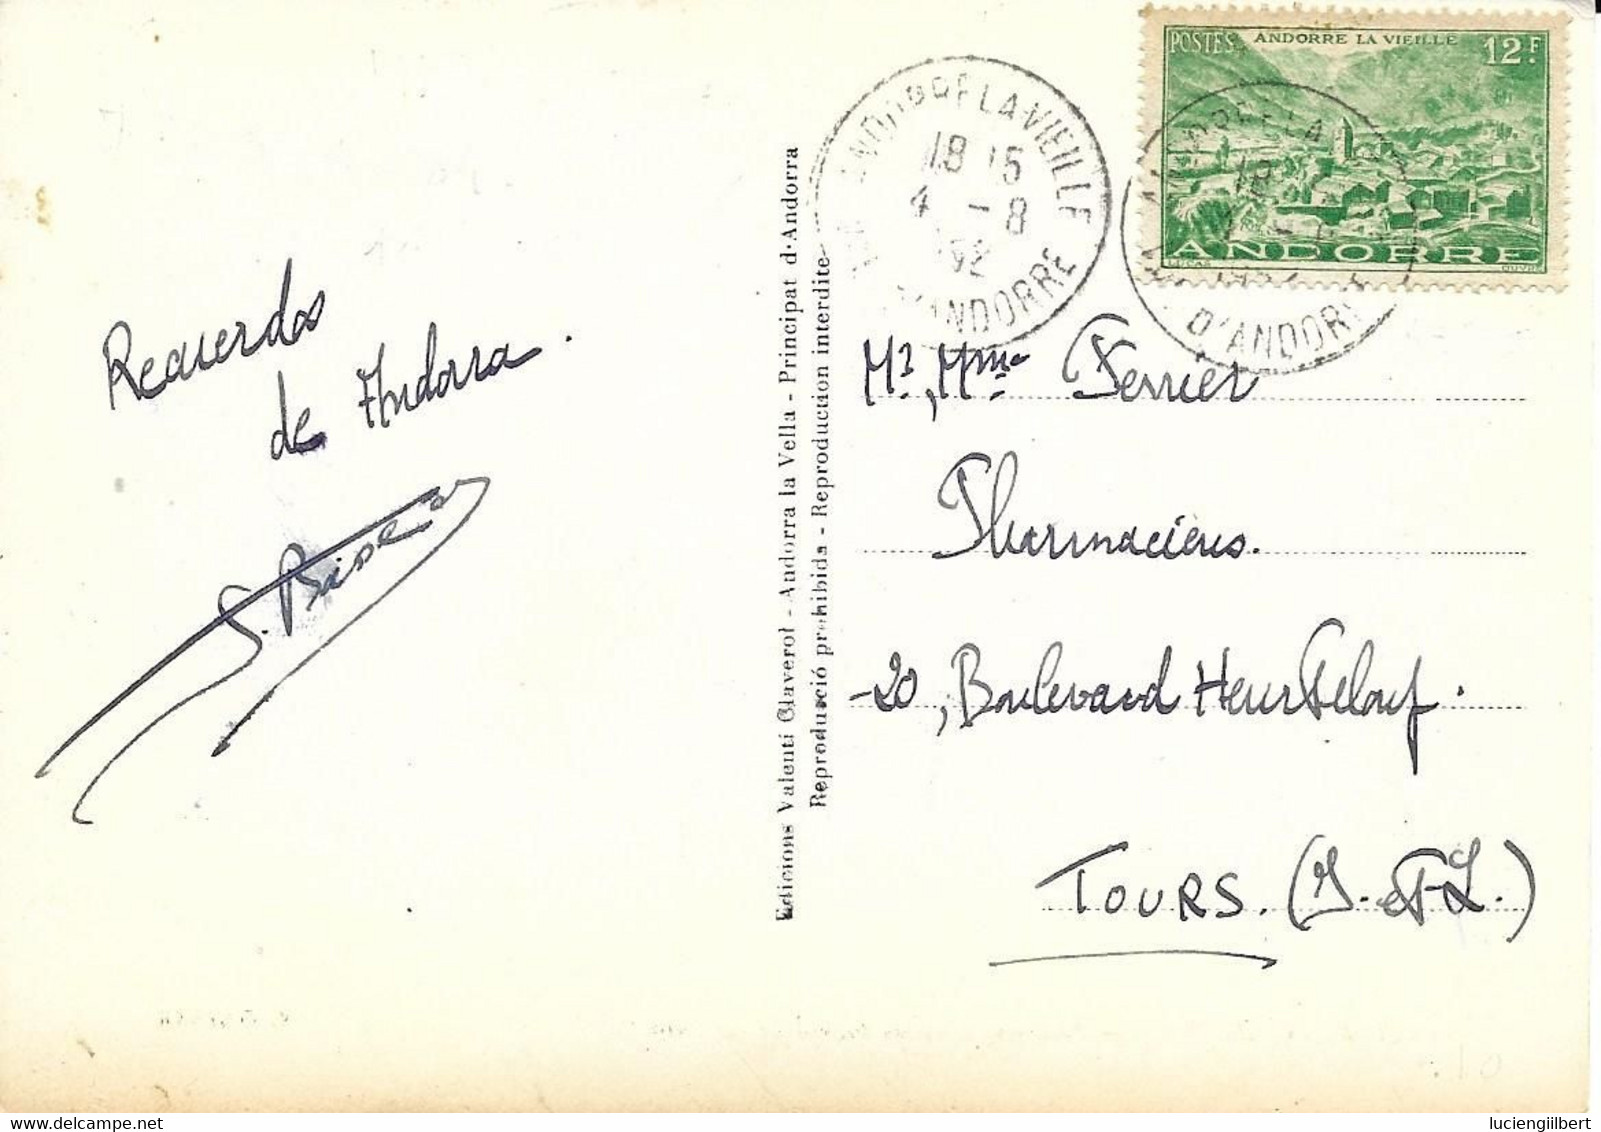 ANDORRE -    TIMBRES  N° 130 -  MAISON DES VALLEES  -  TARIF CP 6 01 49  -  1952 - CACHET MANUEL ANDORRE LA VIEILLE - Briefe U. Dokumente